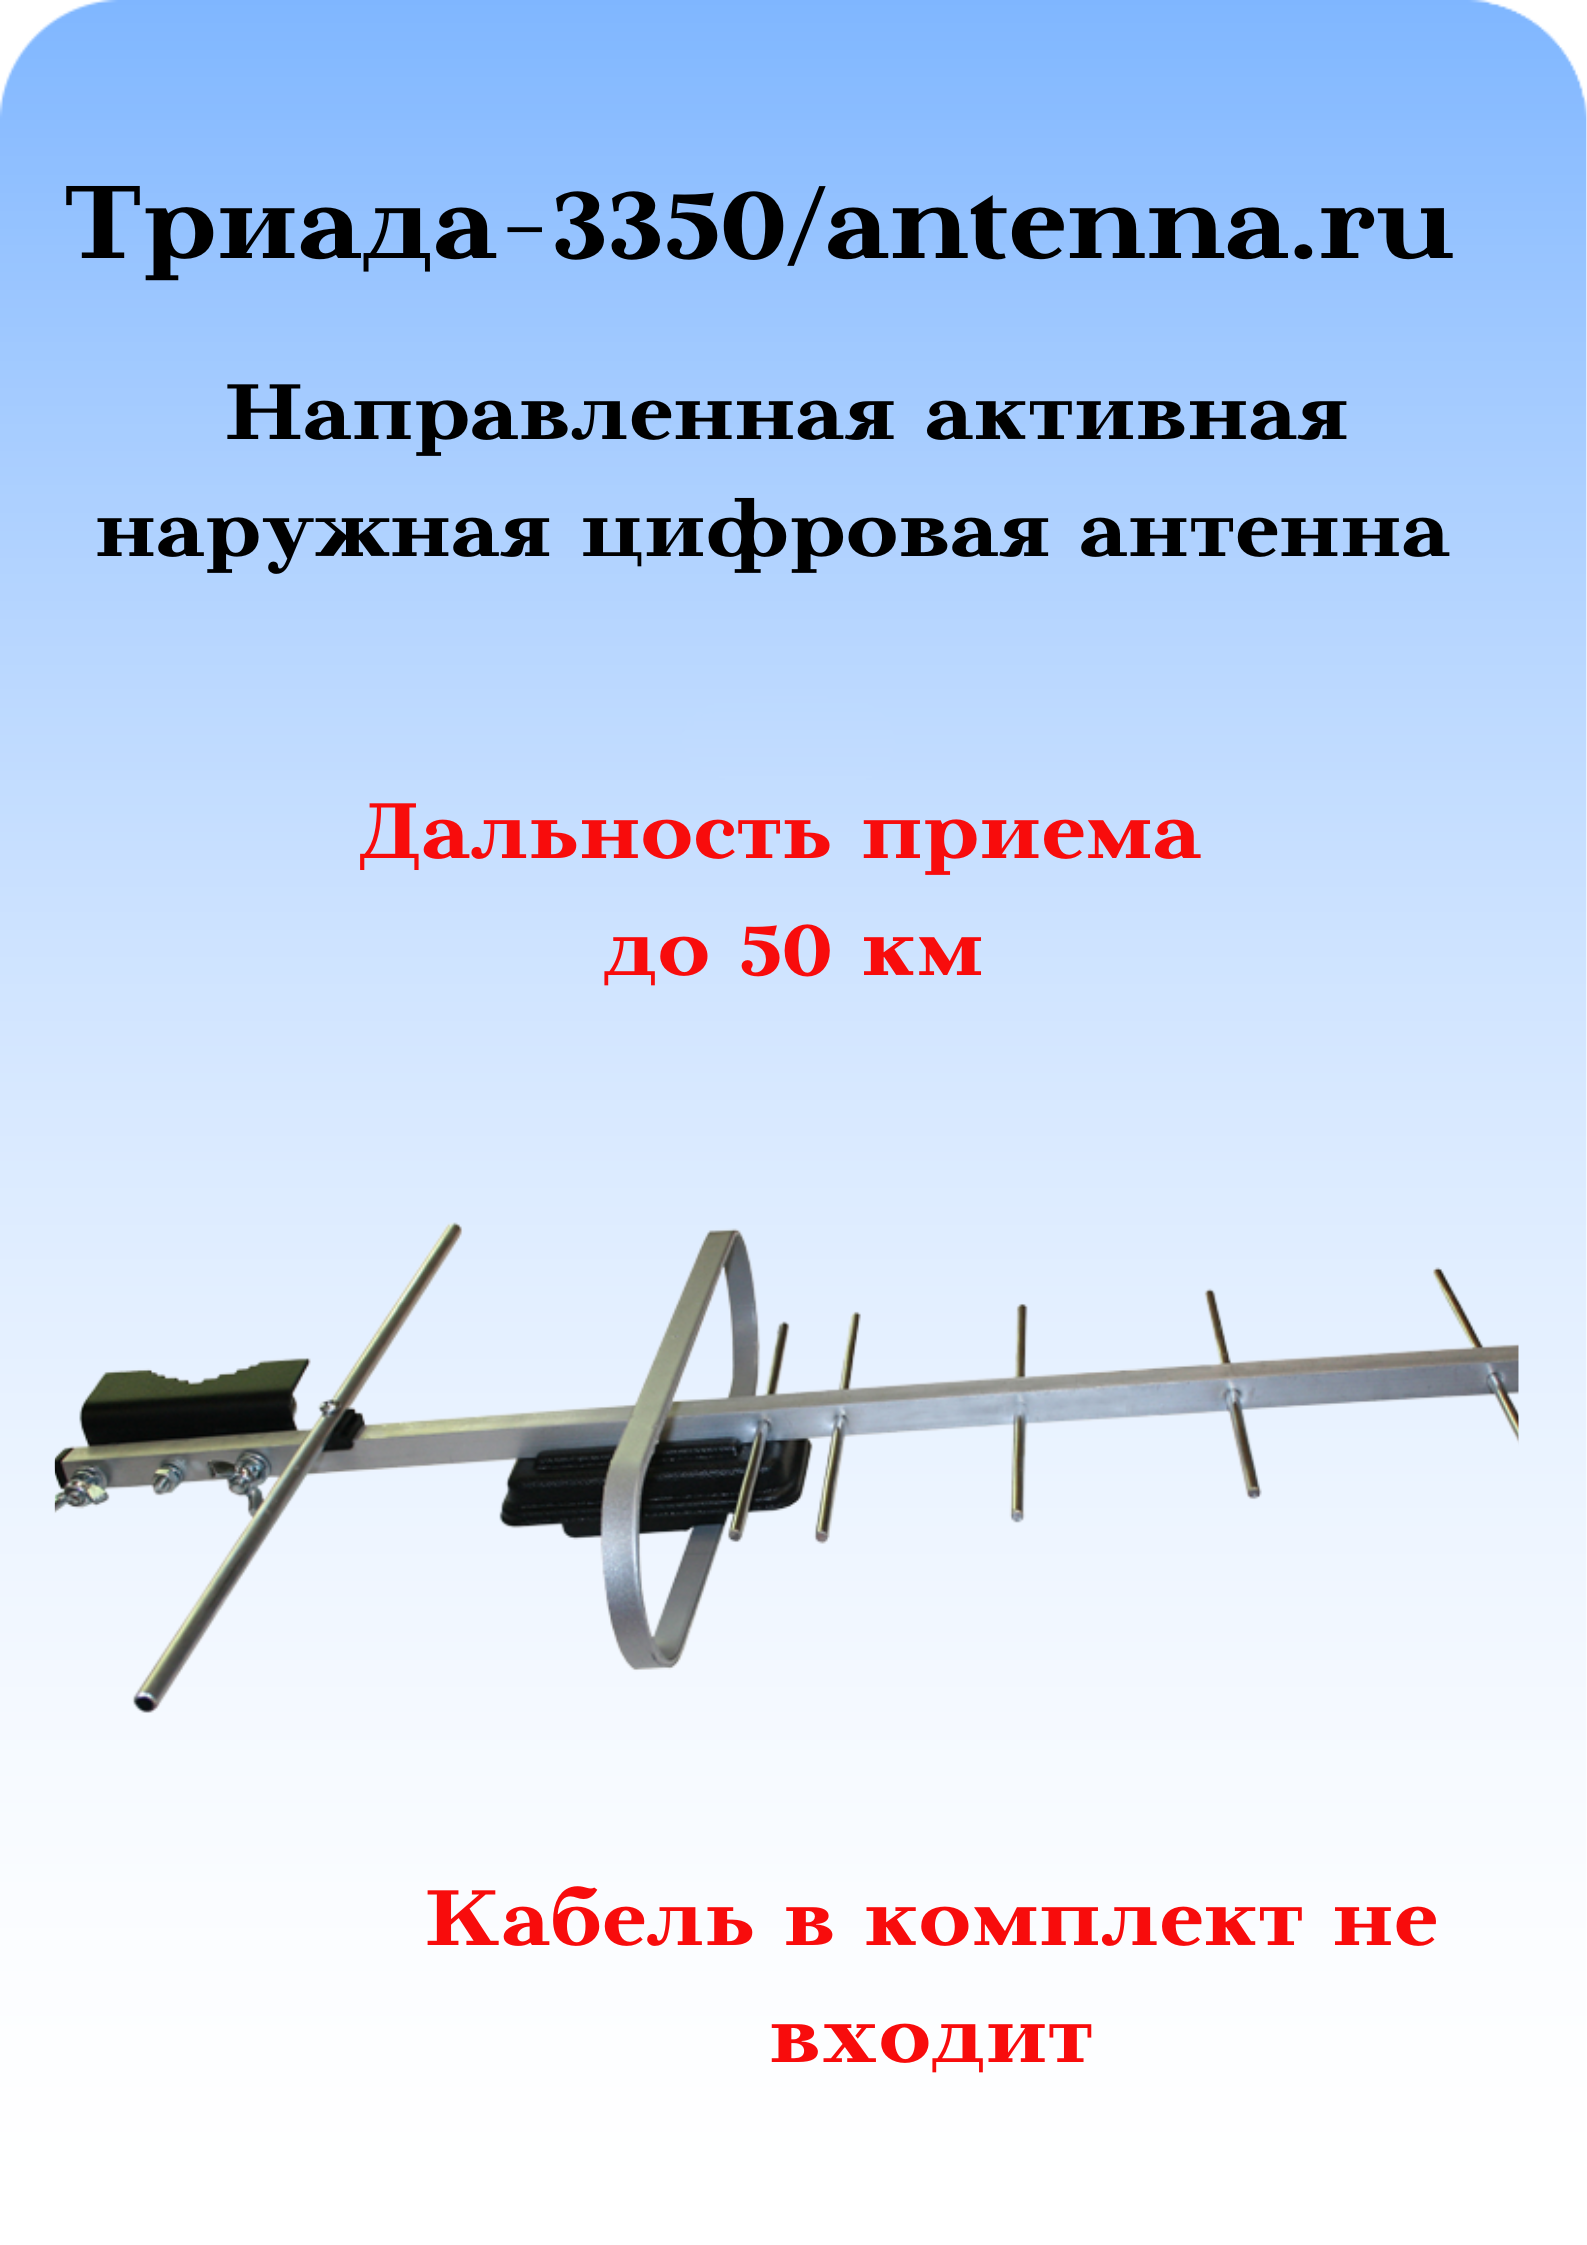 gde-kupit-cifrovuy-50km-uantennu?-na-antenna.ru--Nhbflf-3350